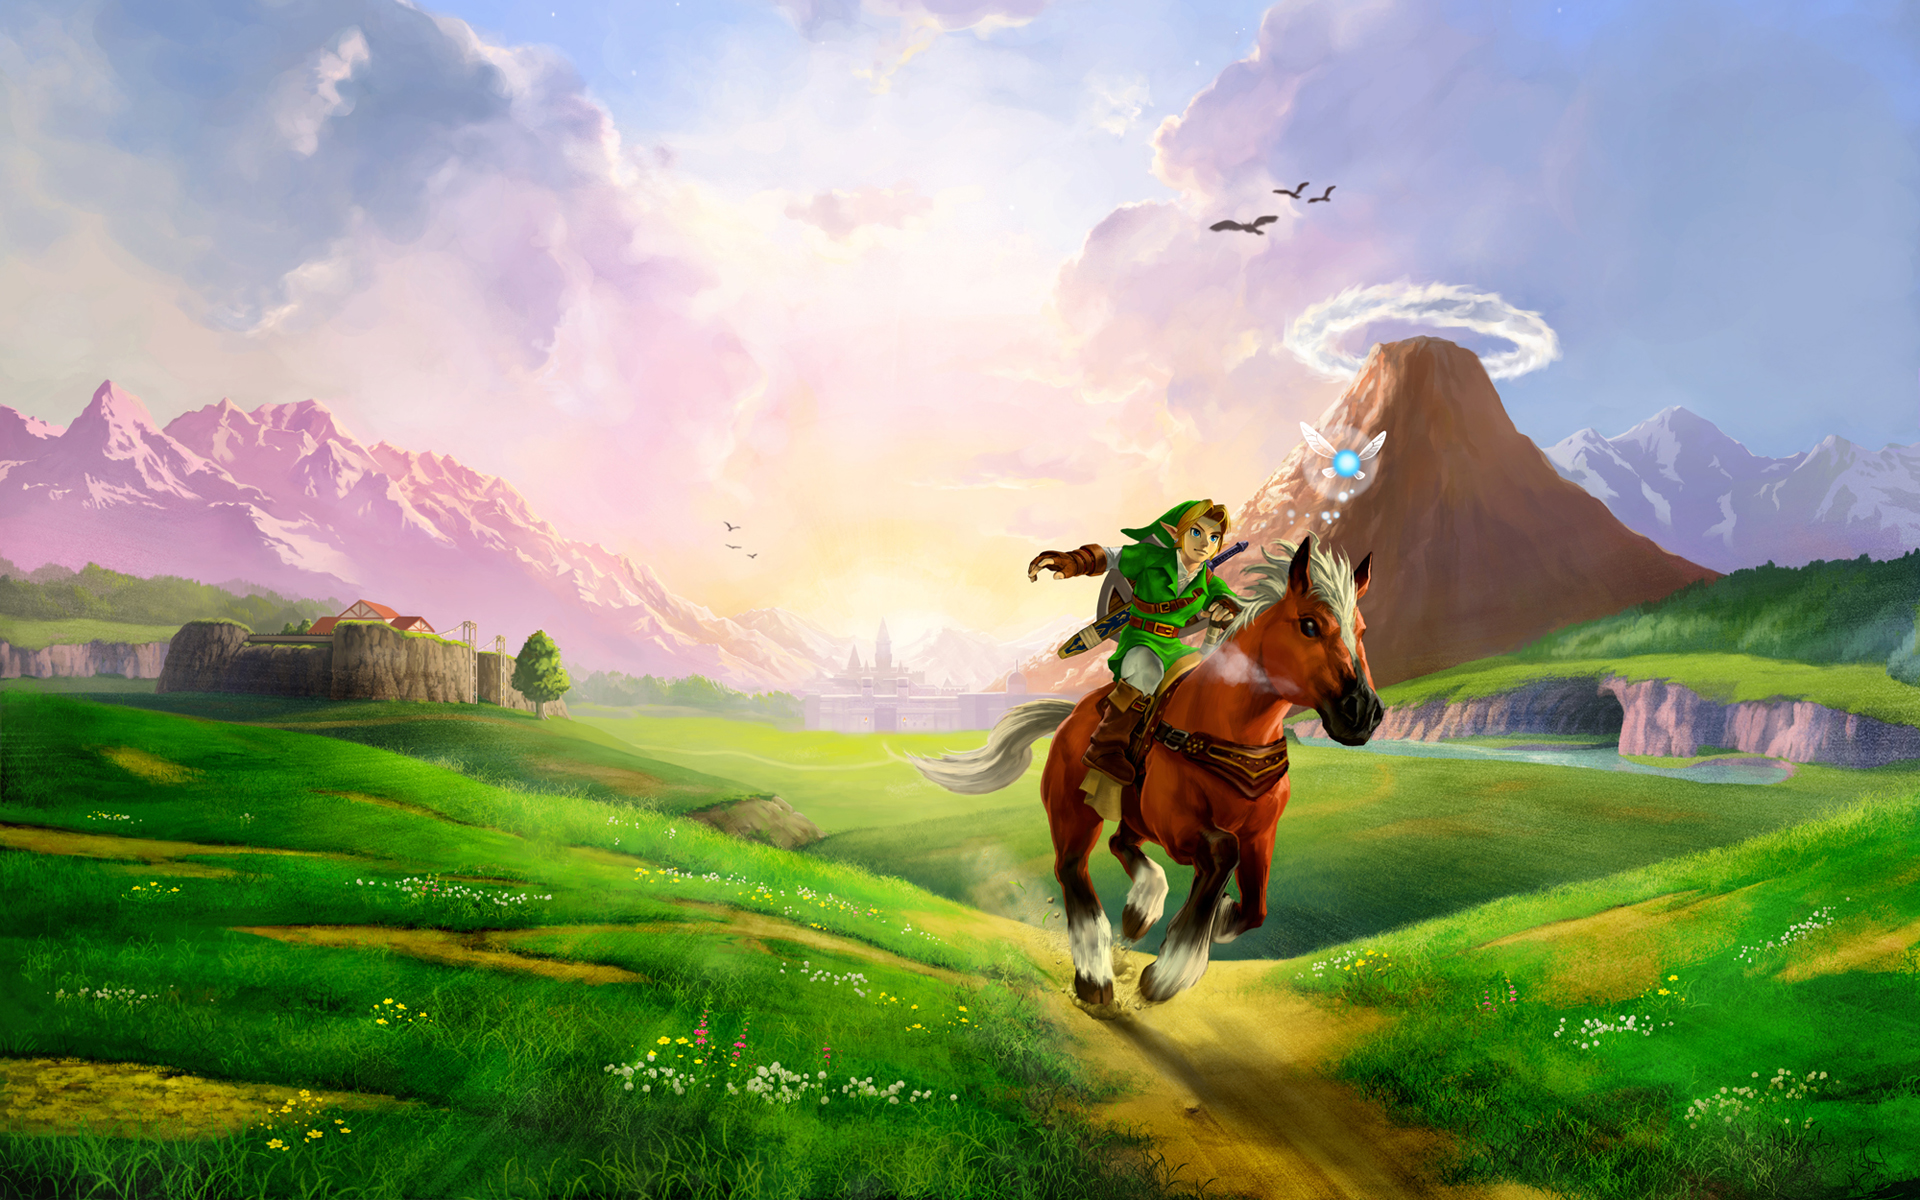 Link Riding Epona Through Hyrule Field